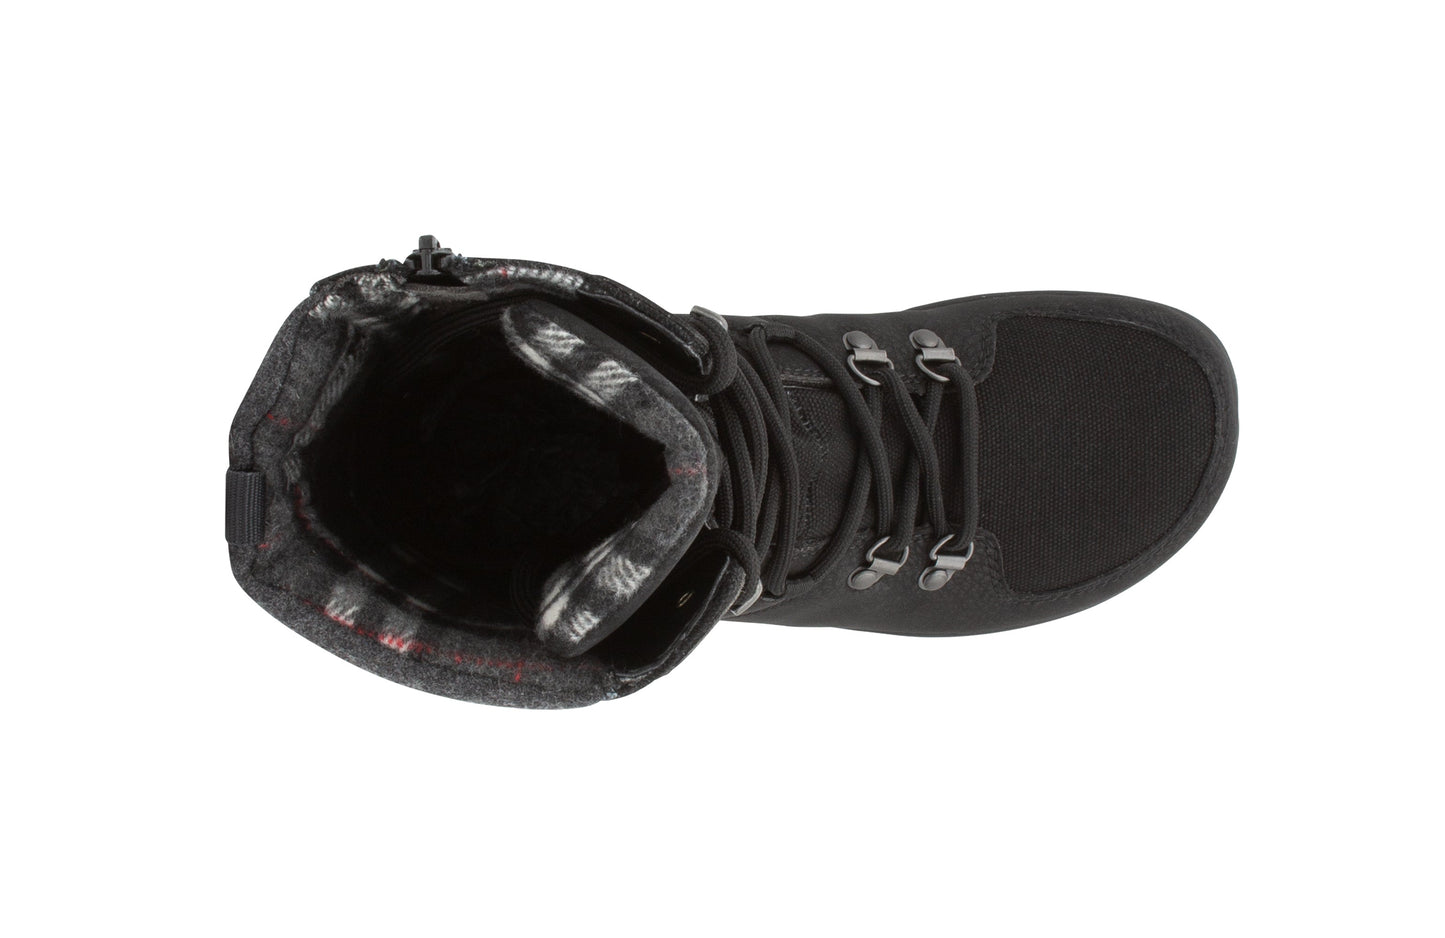 Xero Shoes Mika barfods vinterstøvler til kvinder i farven black, top